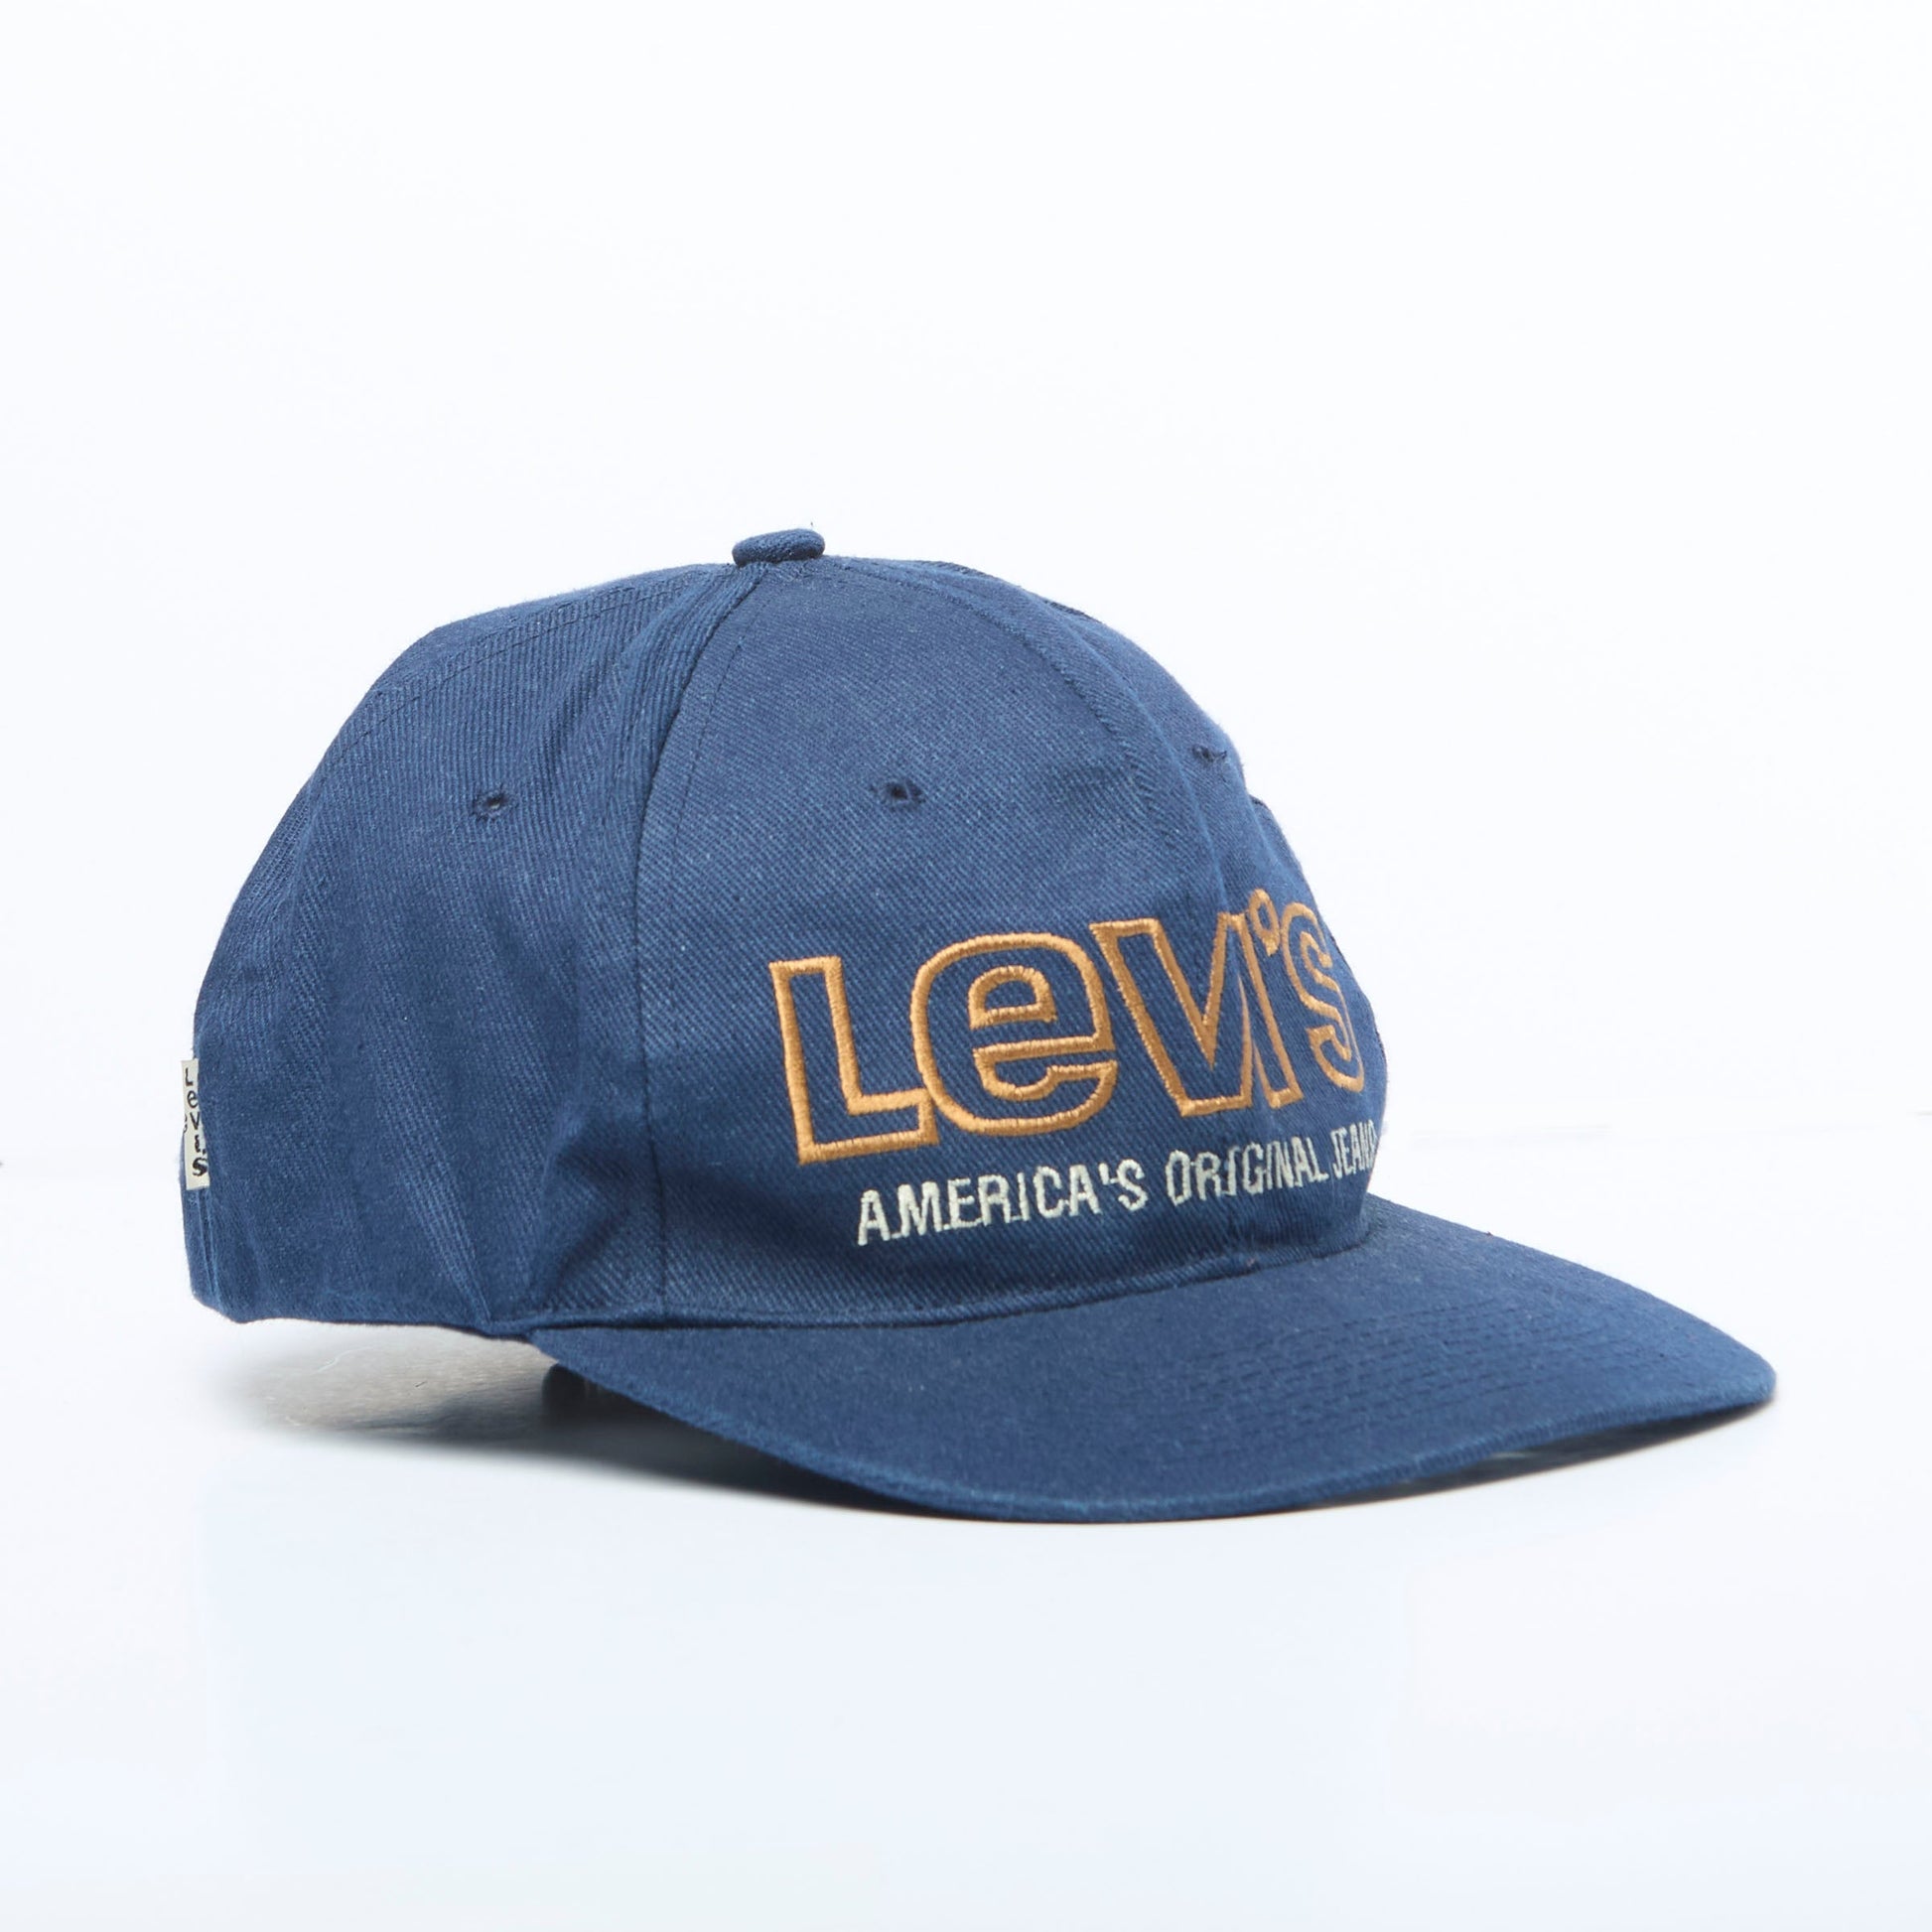 Levis Baseball Cap